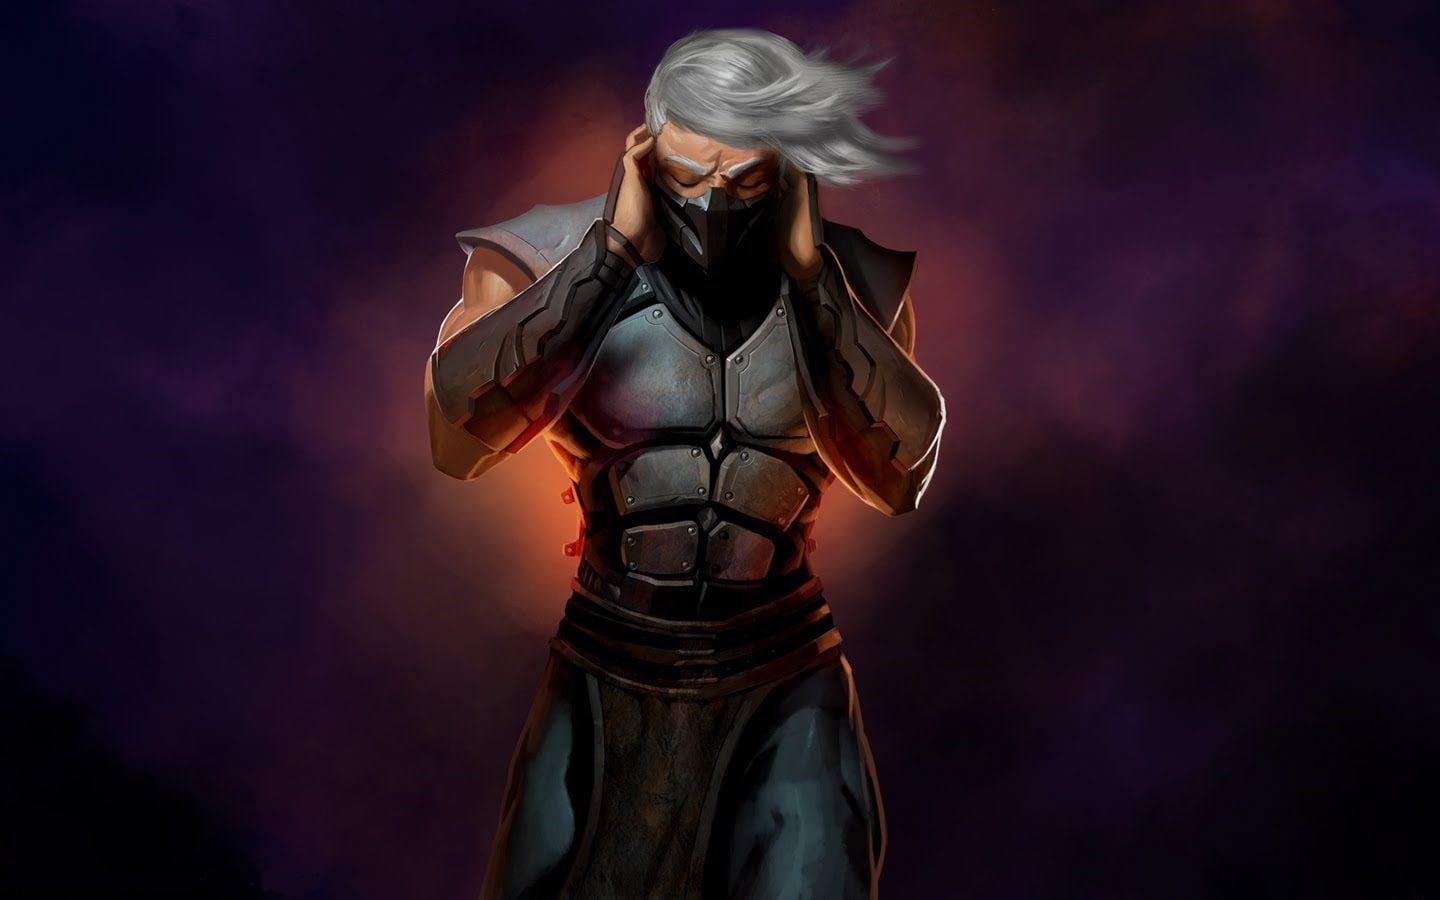 Mortal Kombat Smoke HD, man in black mask wallpaper video games #smoke #mortal #kombat P #wallpaper #hdwa. Mortal kombat, Mortal kombat characters, Black mask